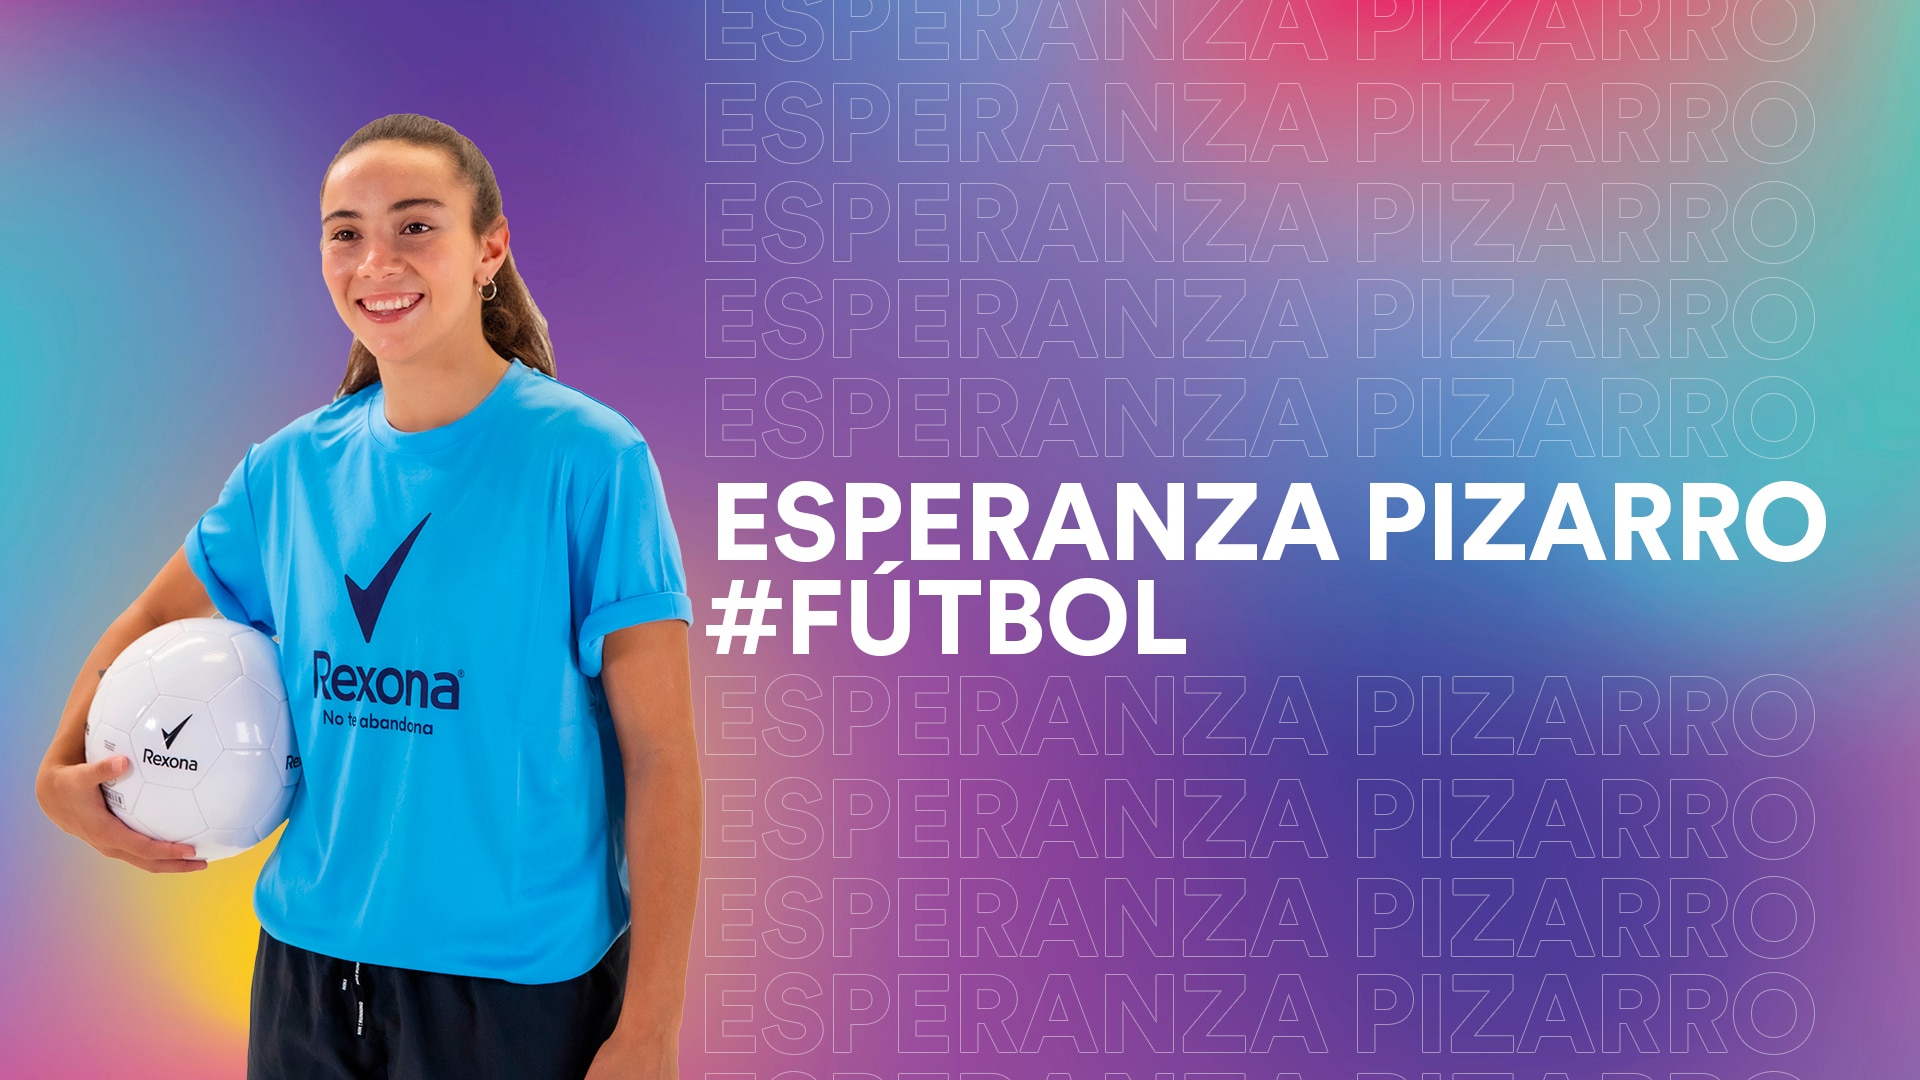 Futbol - Esperanza Pizarro